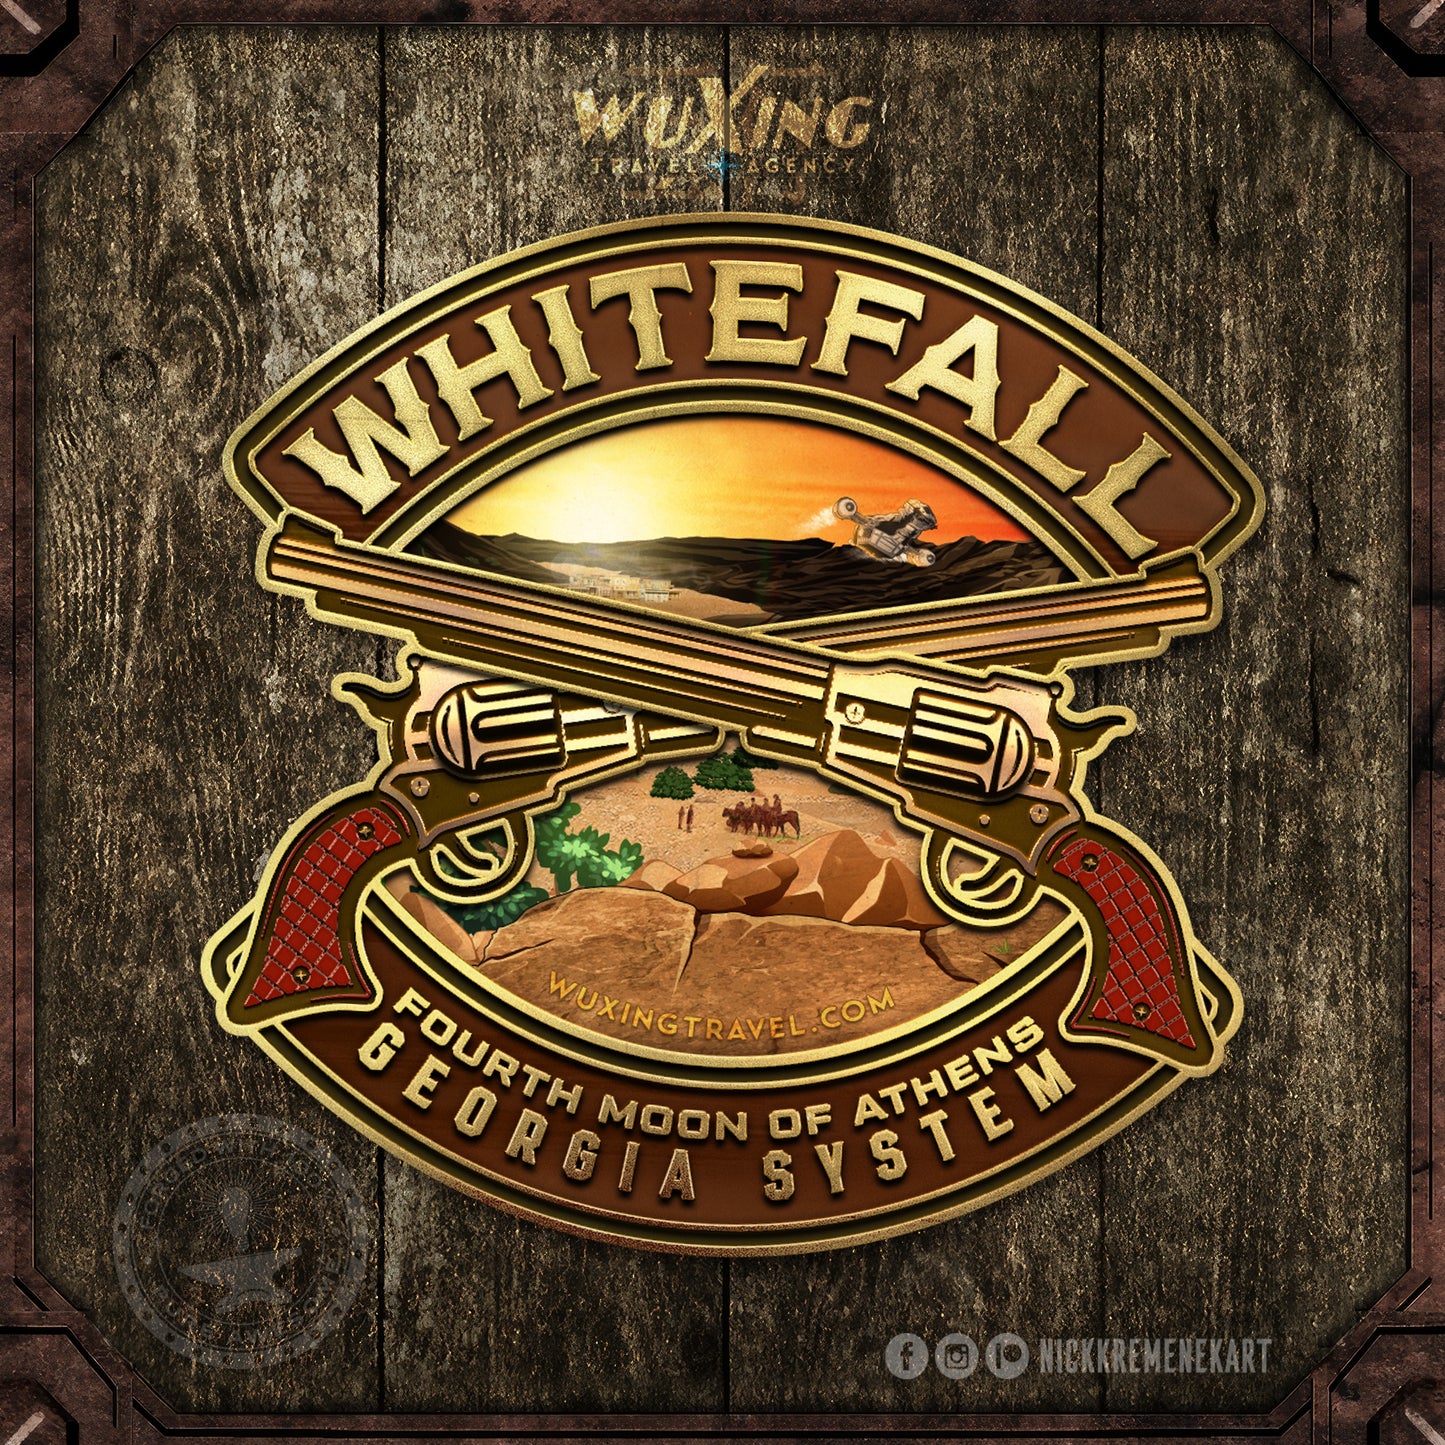 WuXing Travel Agency "Whitefall" Metallic Vinyl Sticker